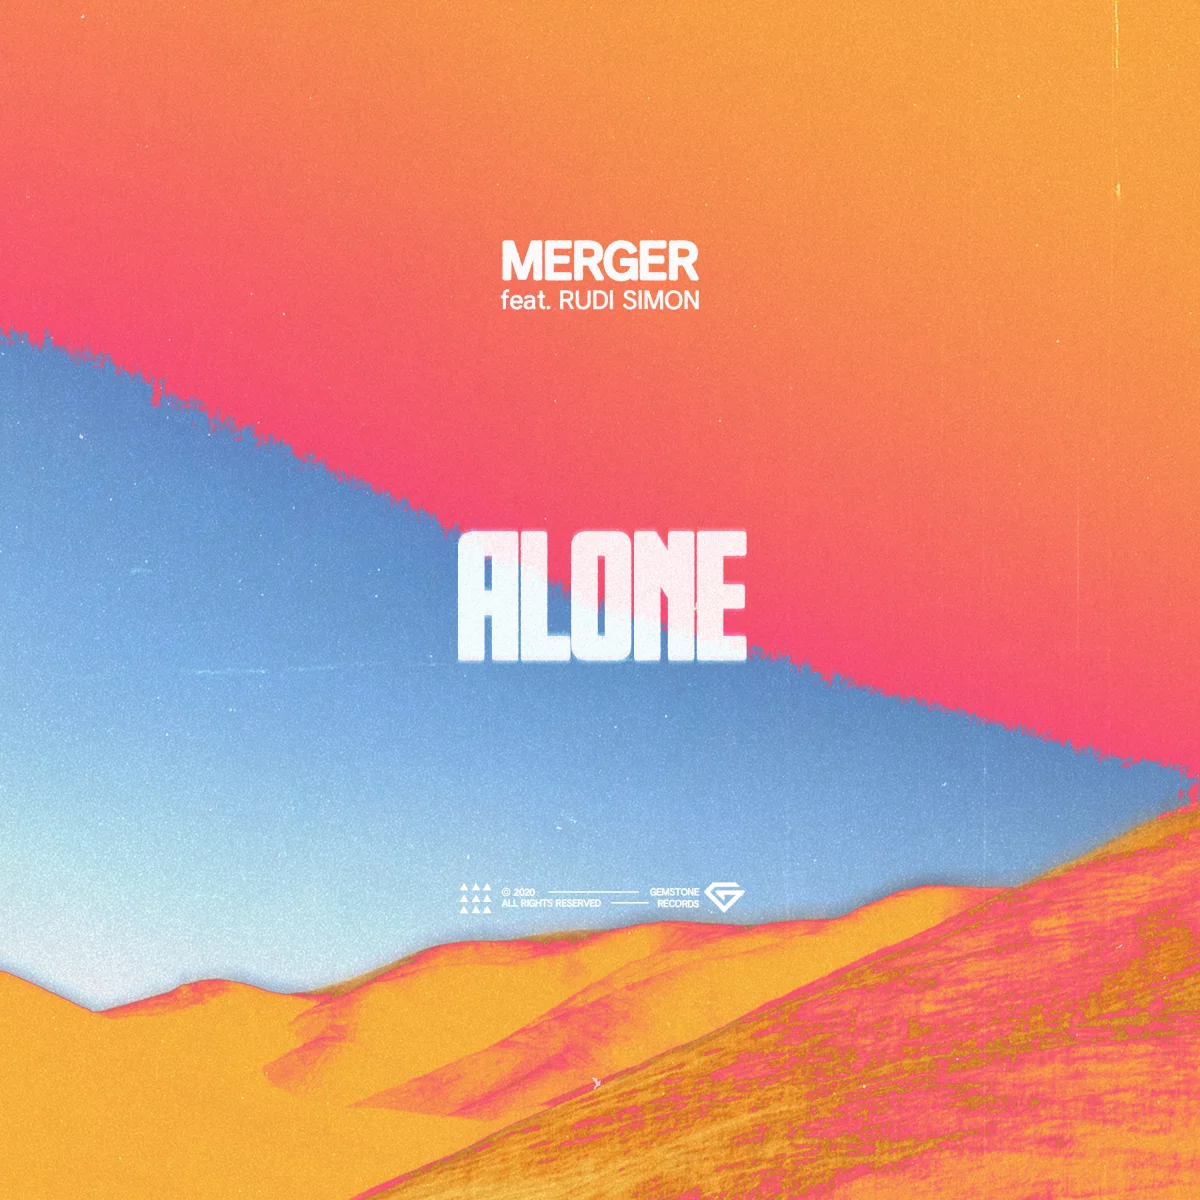 Alone - Merger⁠ feat. Rudi Simon